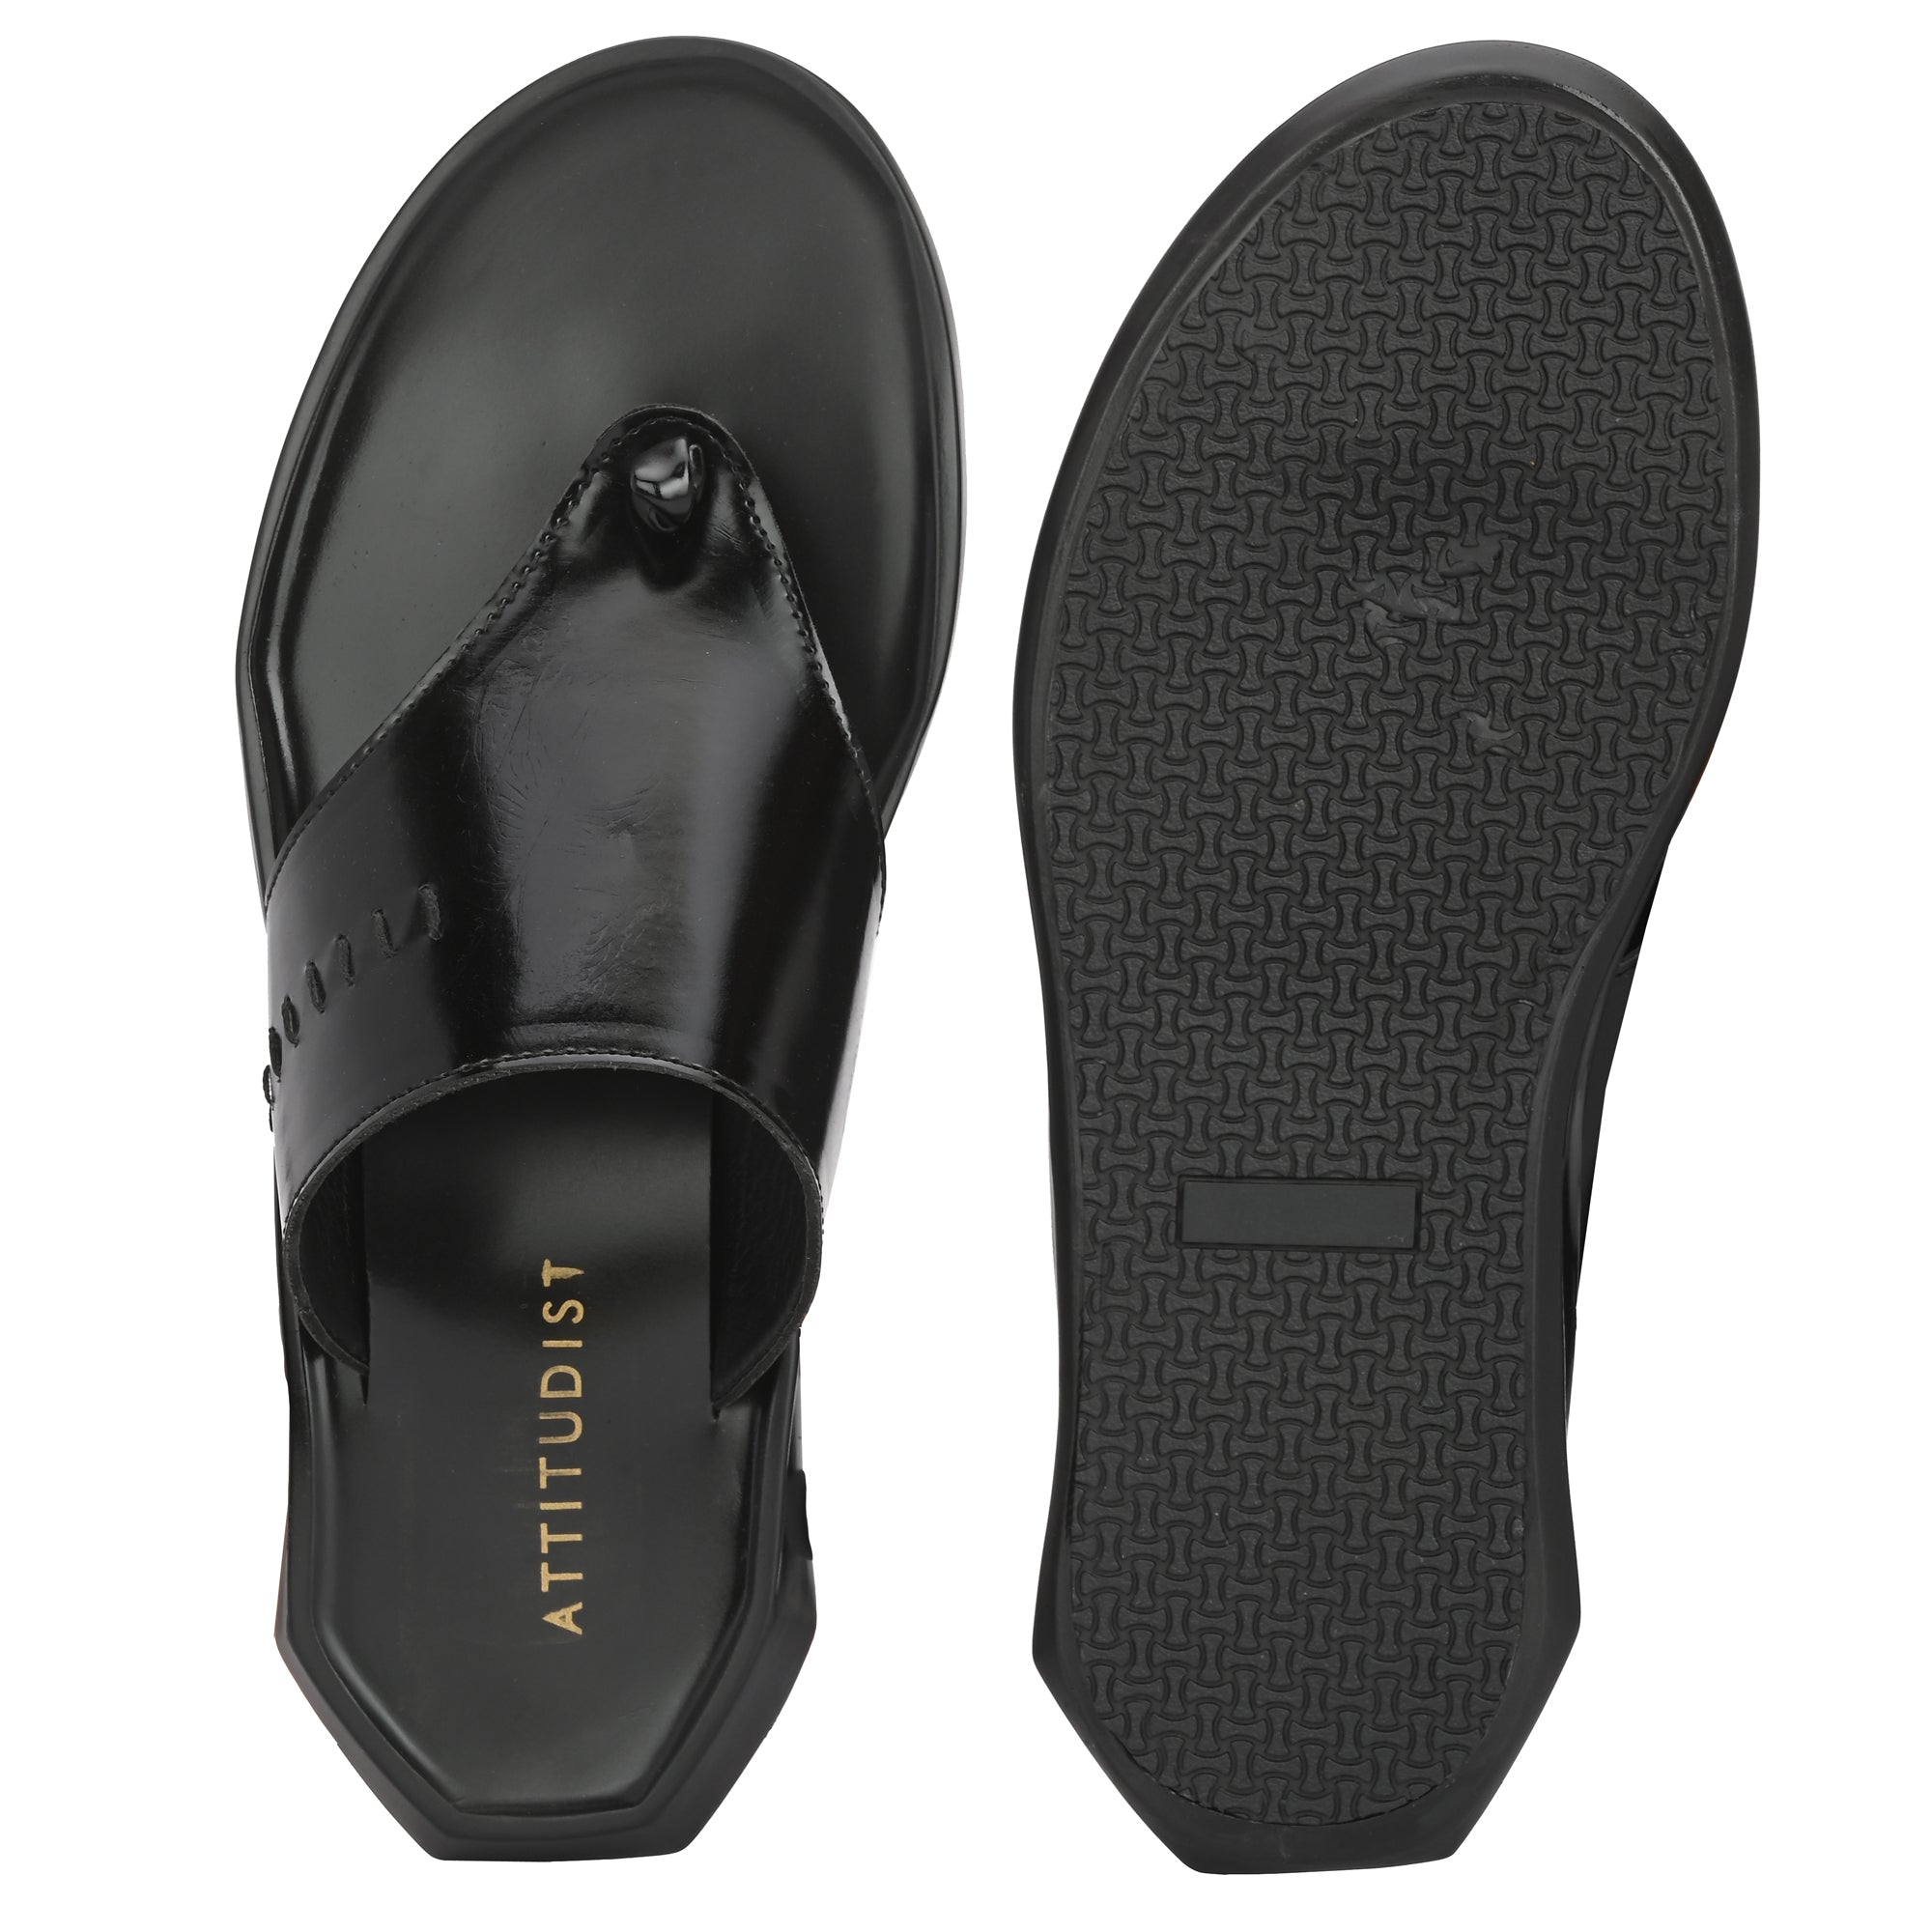 attitudist-black-casual-thong-slippers-for-men